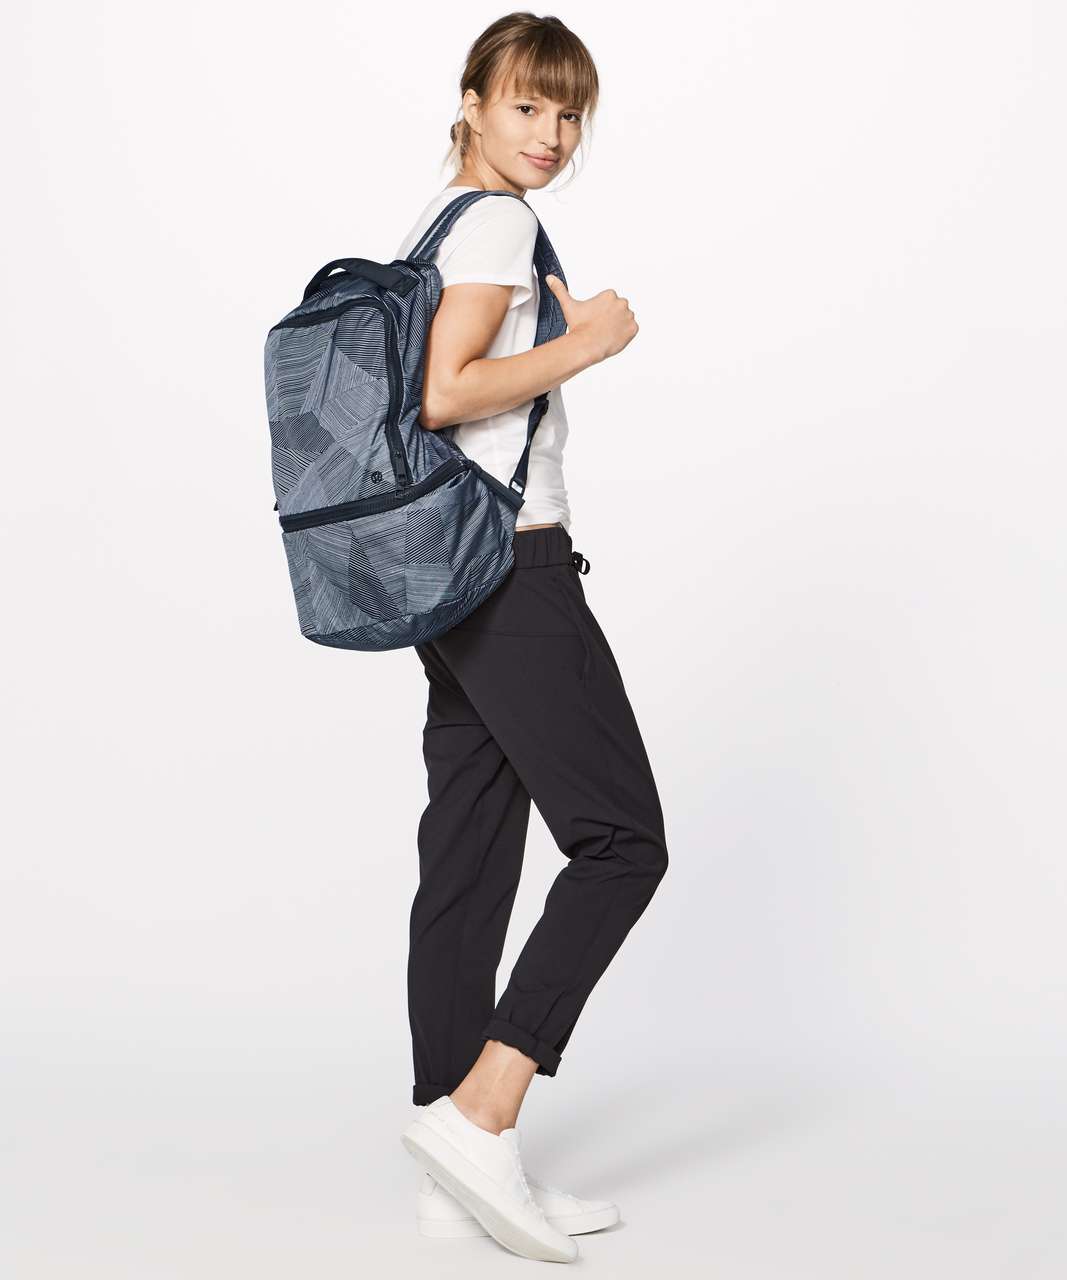 Lululemon Go Lightly Backpack (Large 24L) - Etch Maxi Ice Grey Black